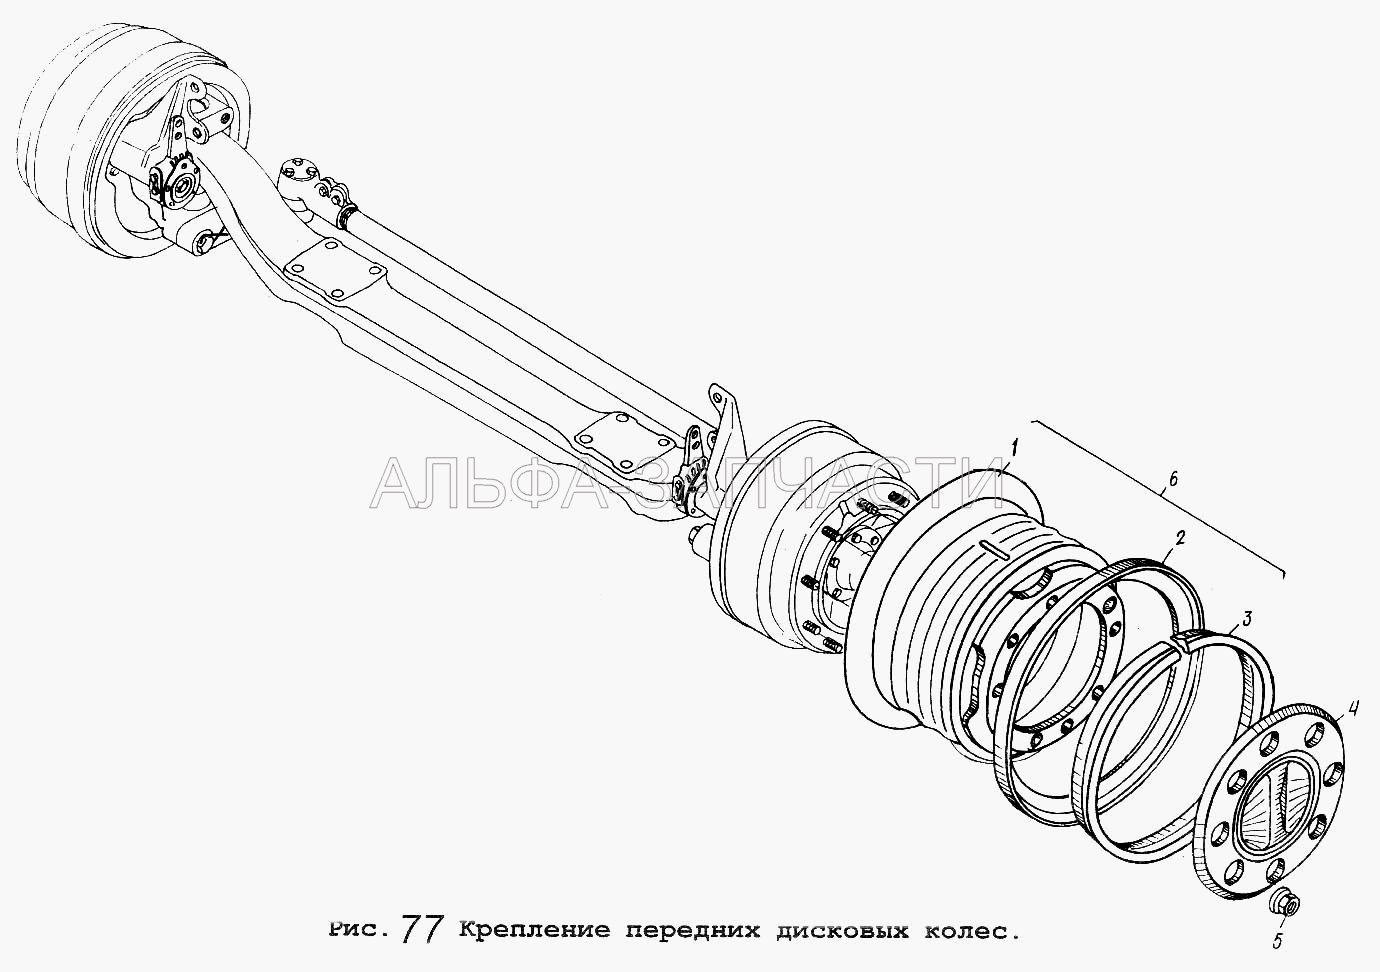 Крепление передних дисковых колес (93865-3104038 Гайка М22х1,5-6Н) 